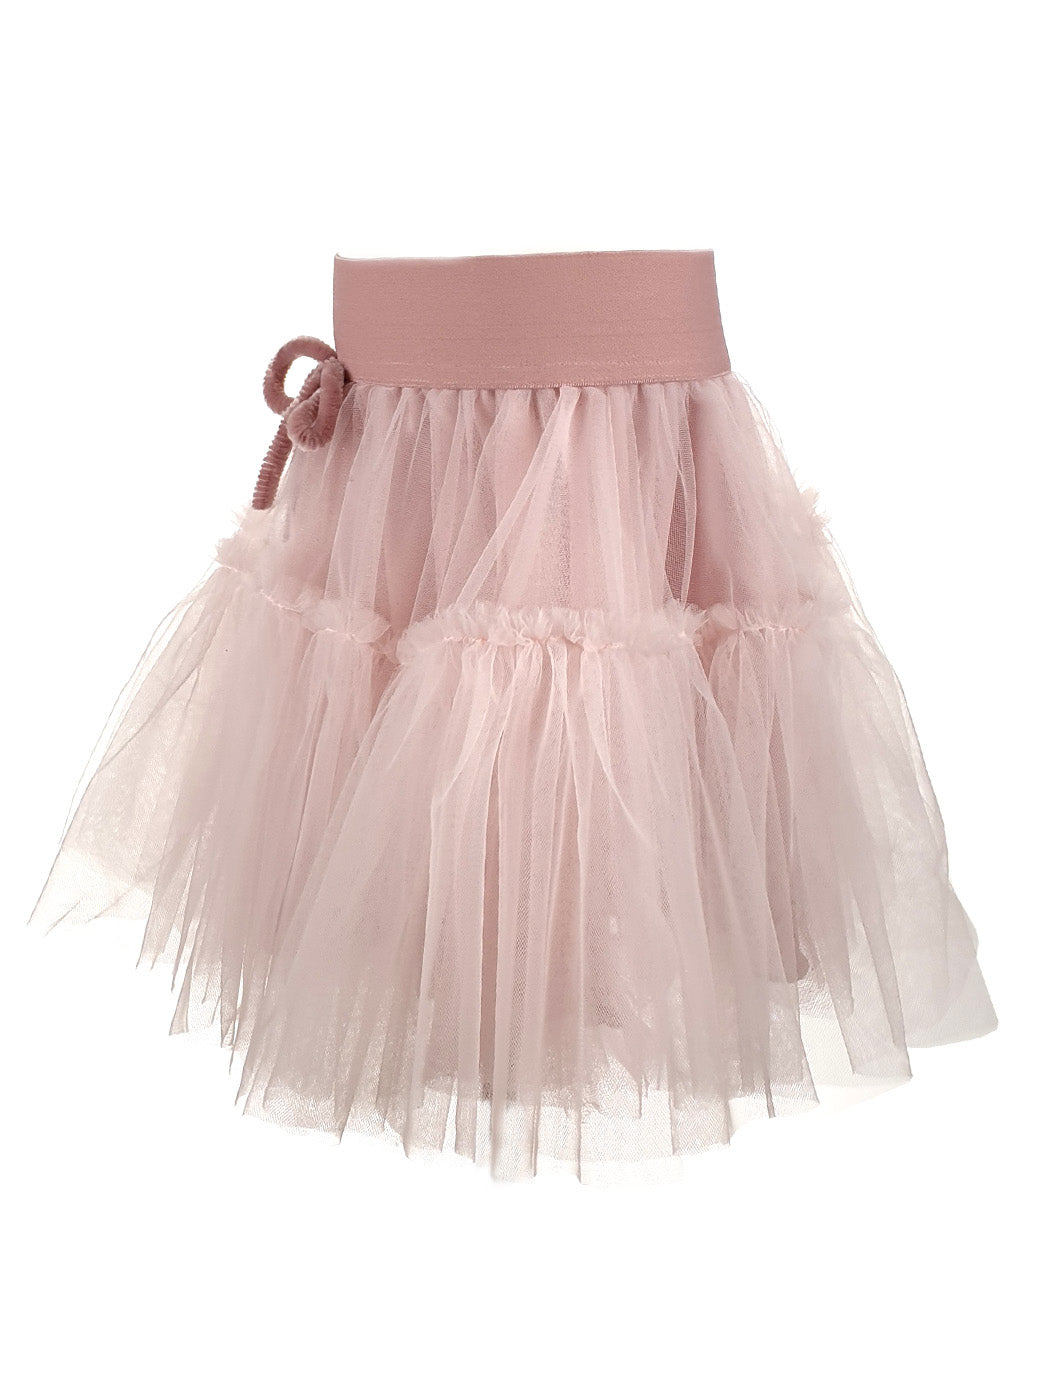 Pink Tutu tulle skirt with ruffles - BROOKE